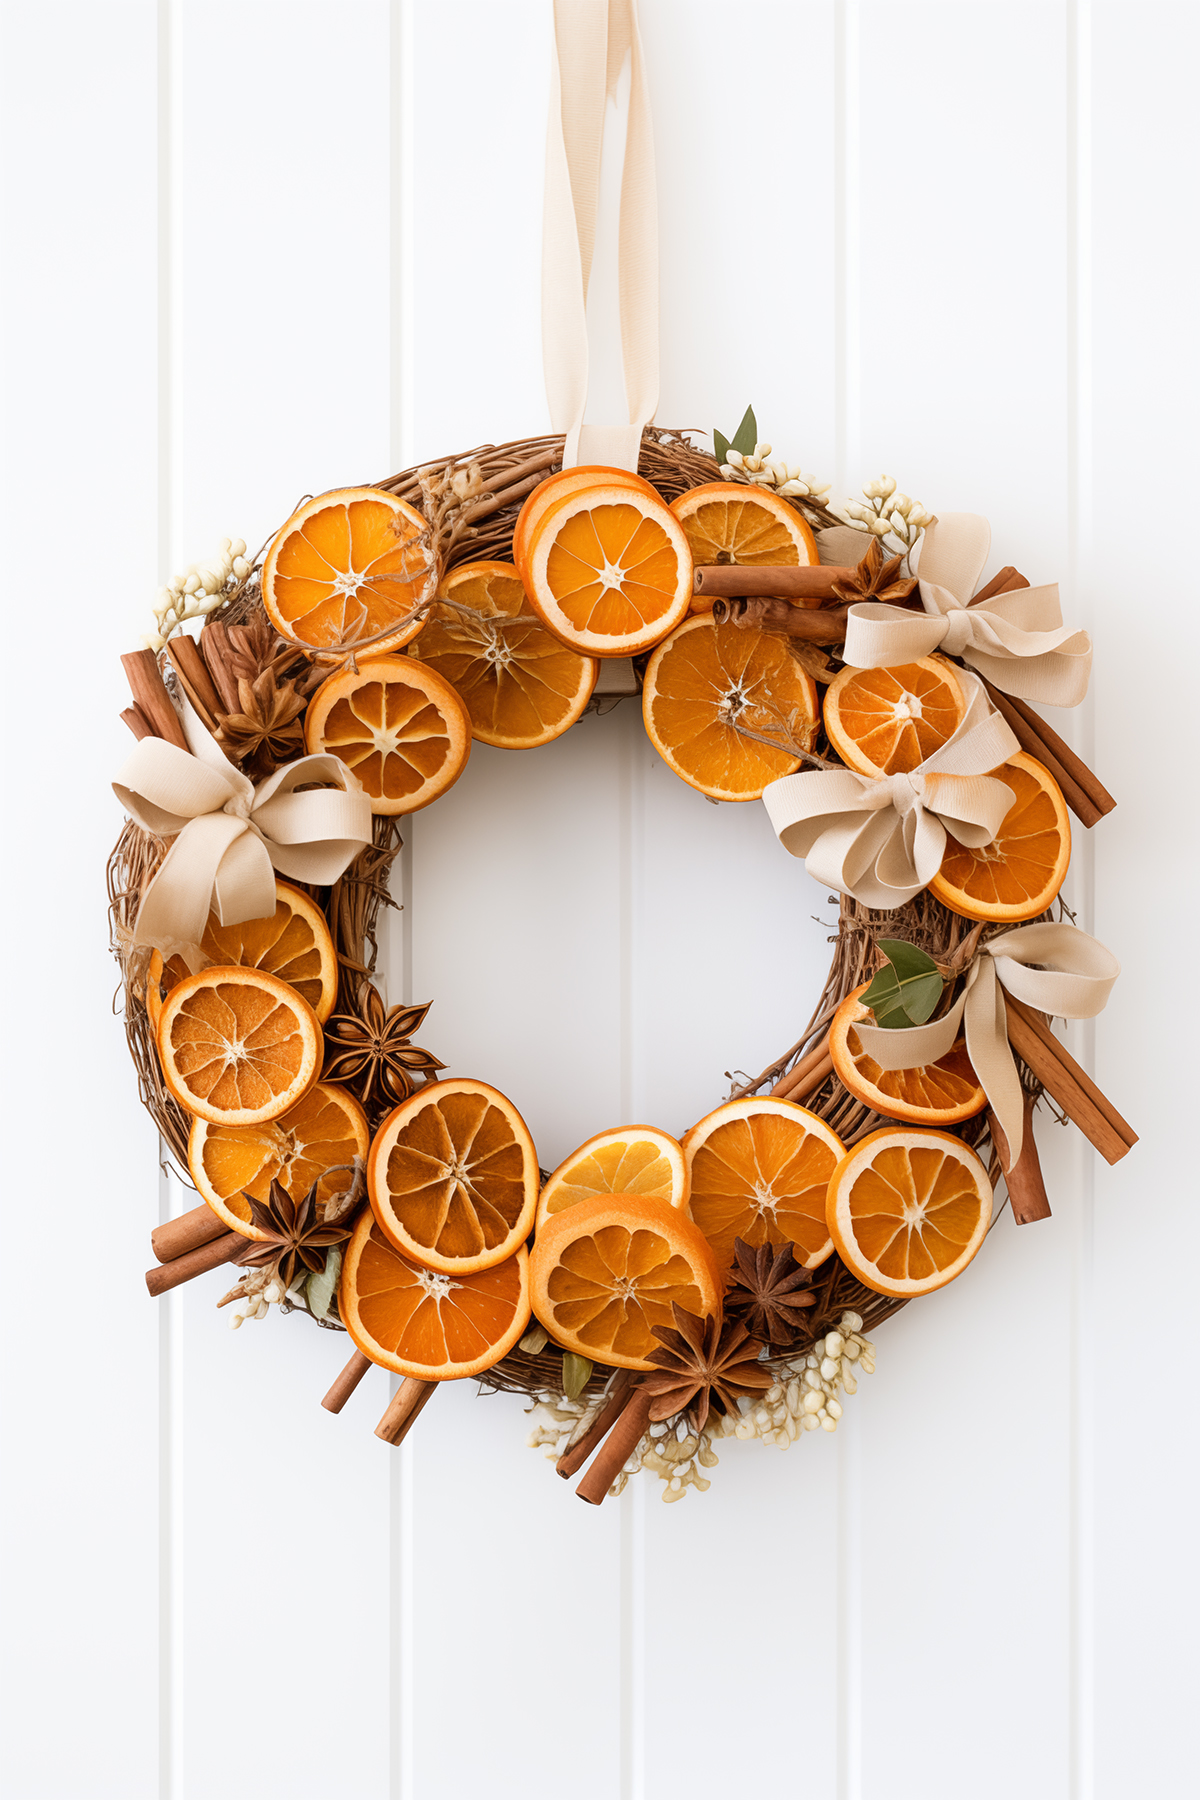 grapevine wreath with dried orange slices and cinnamon sticks